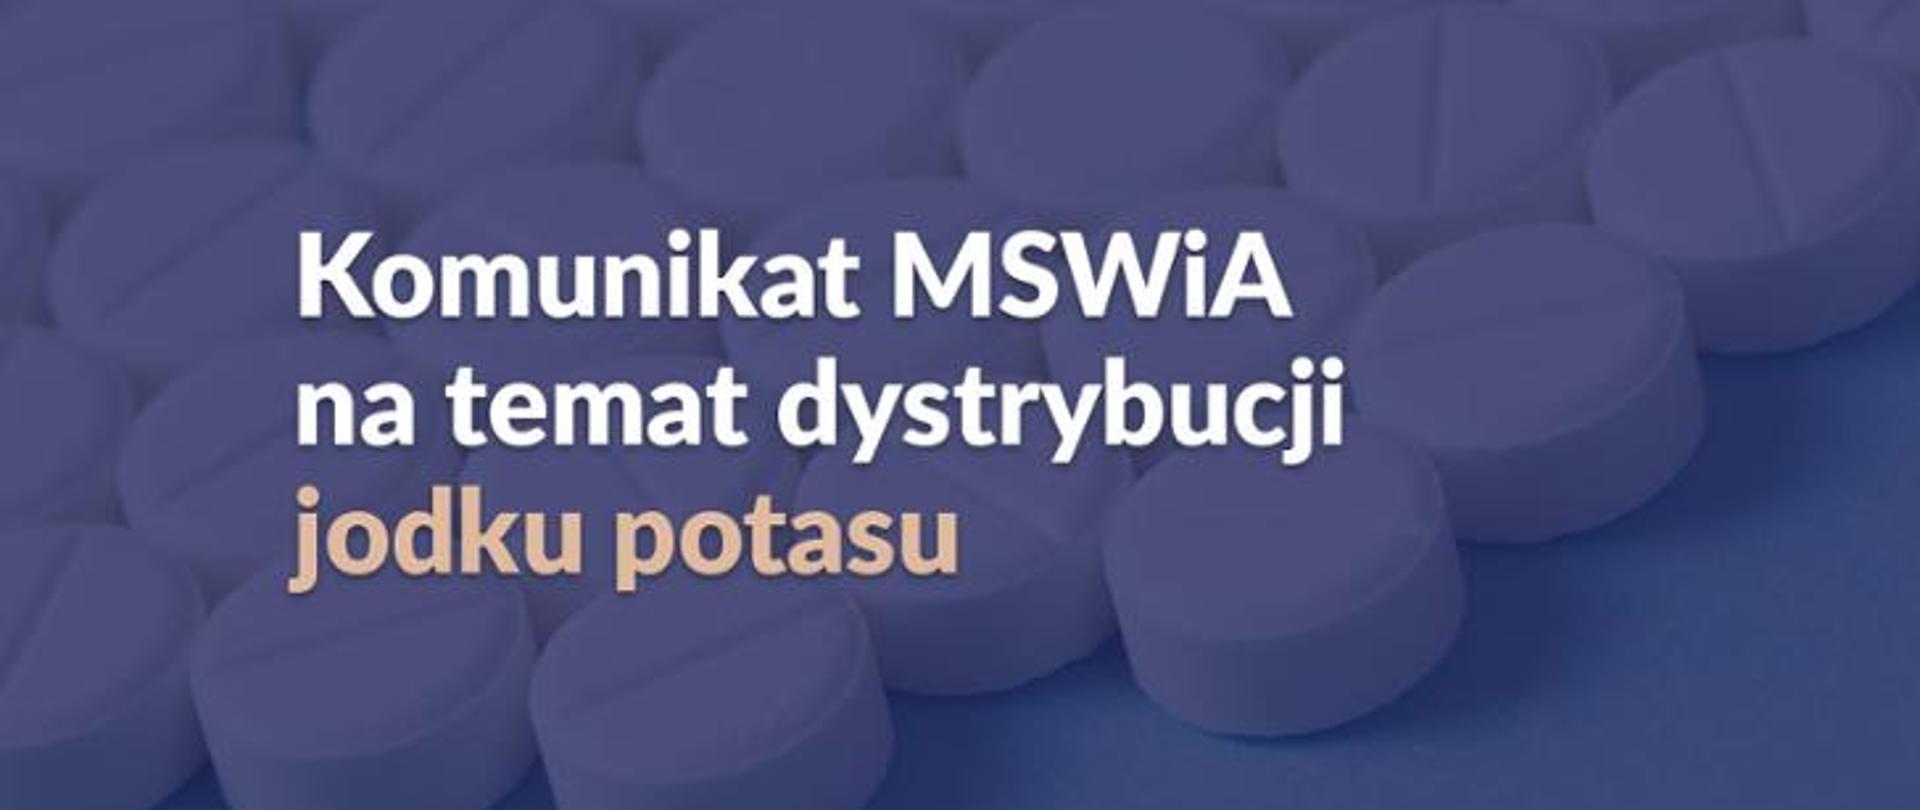 Komunikat MSWiA na temat dystrybucji jodku potasu.